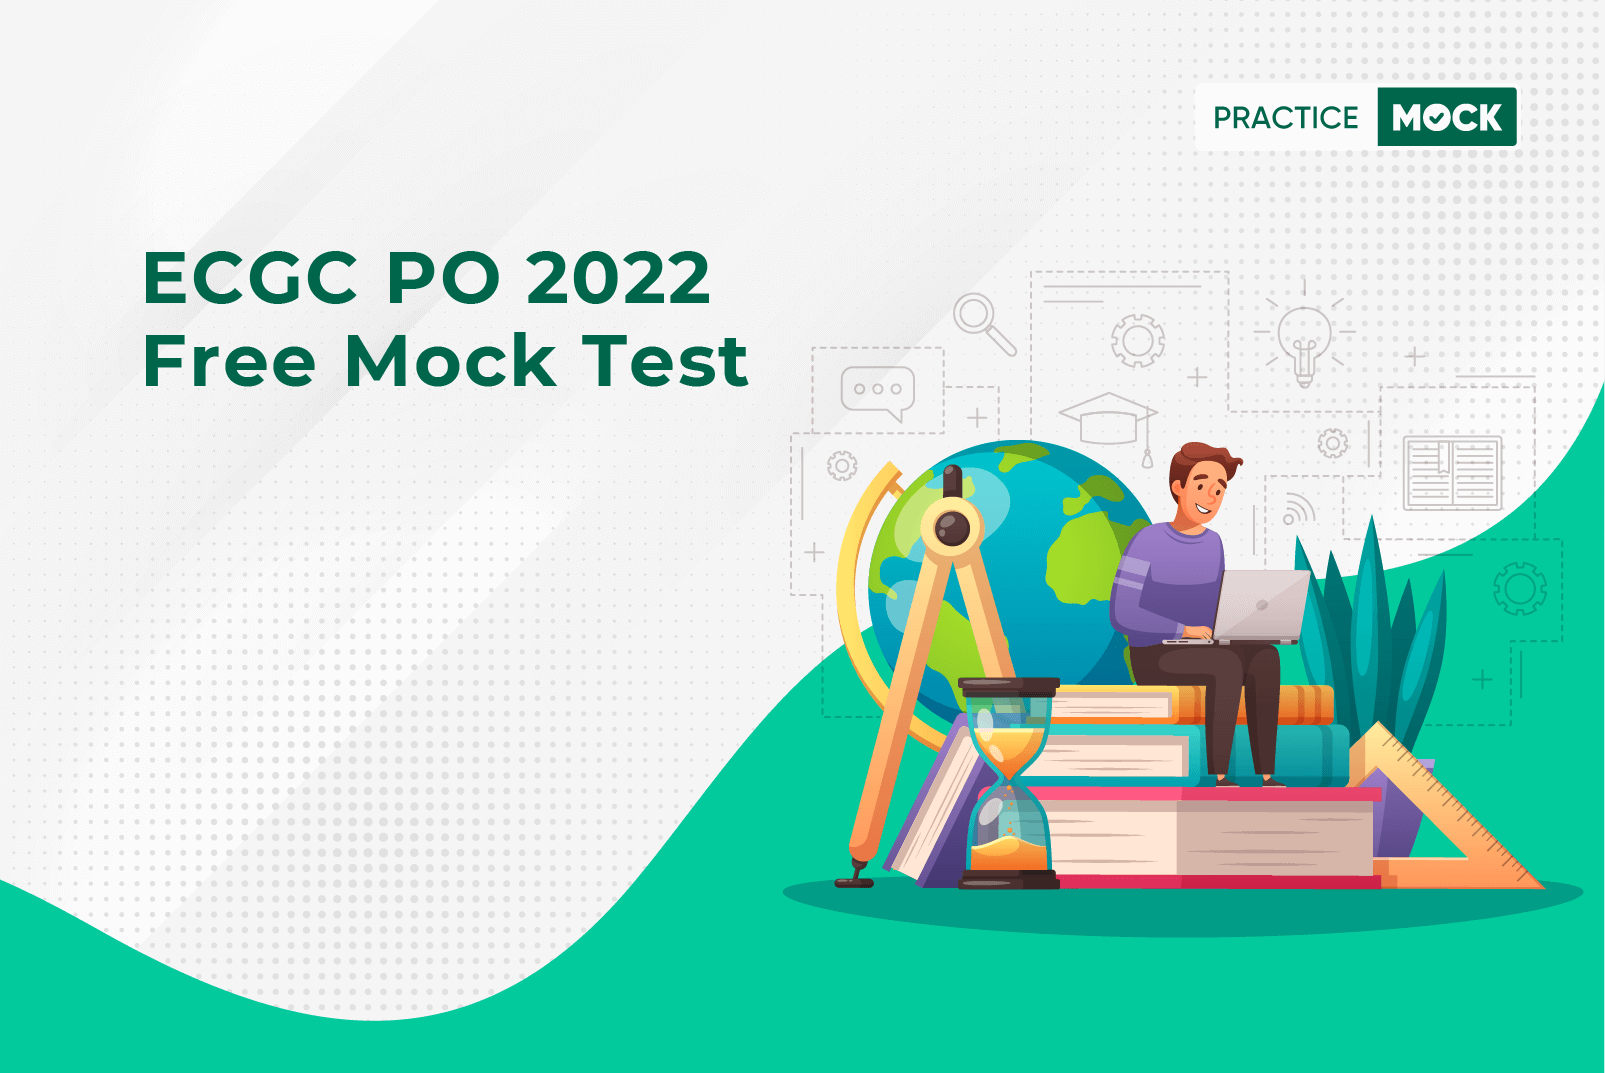 ECGC PO 2022 Free Mock Test